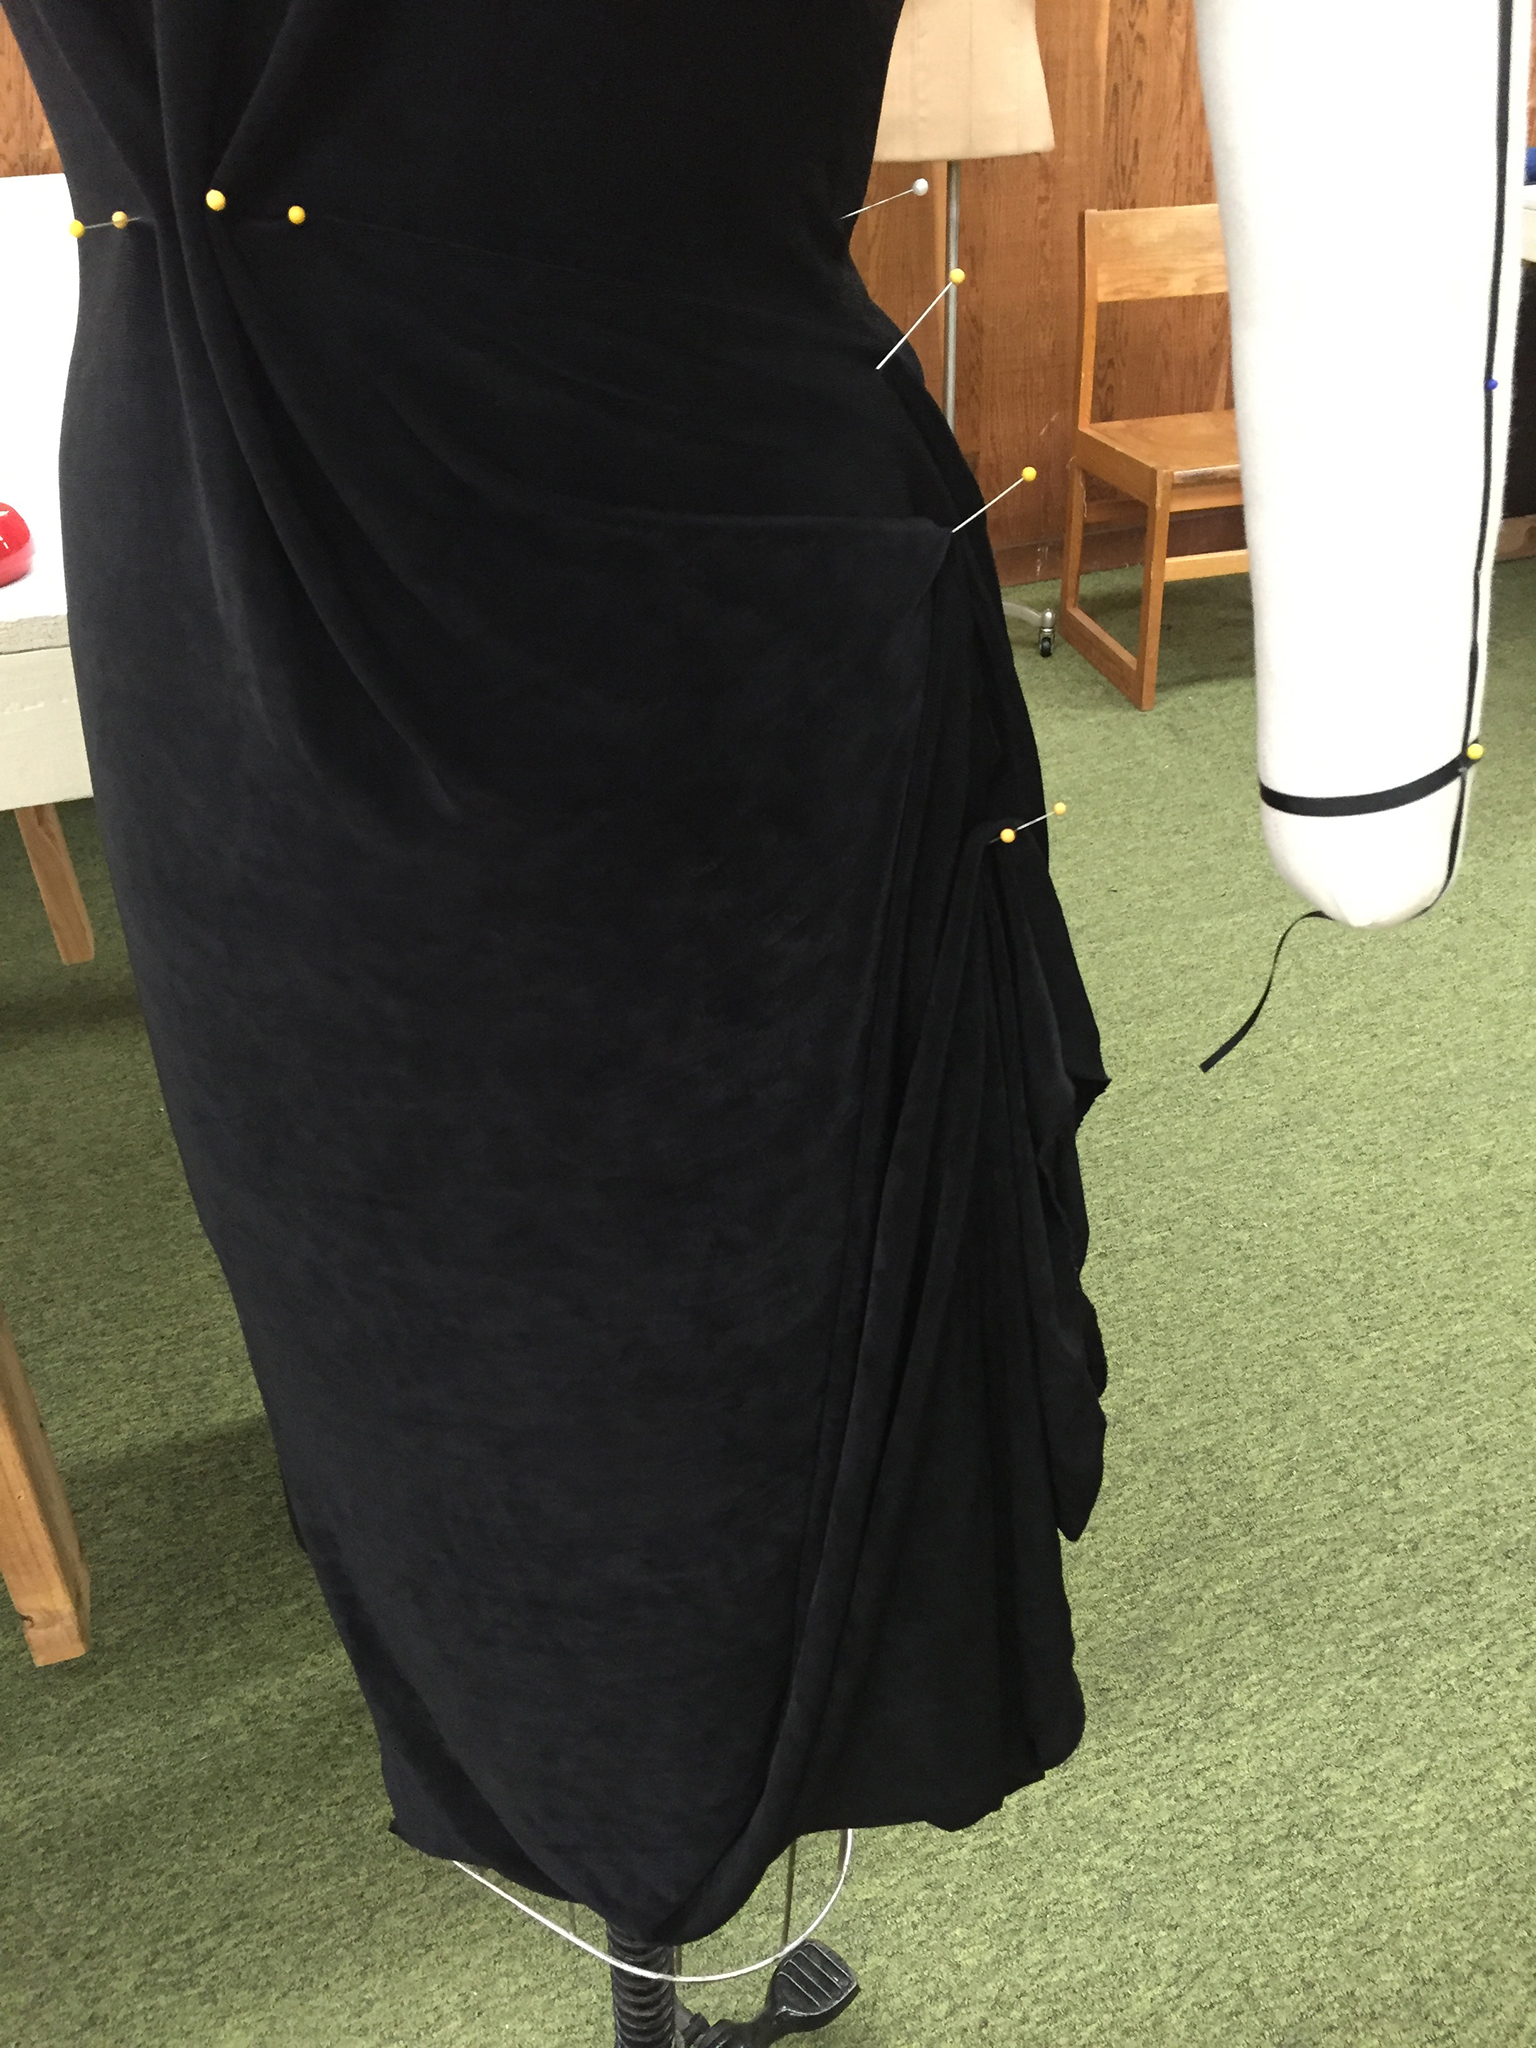 Black knit fabric draped over a dress form.